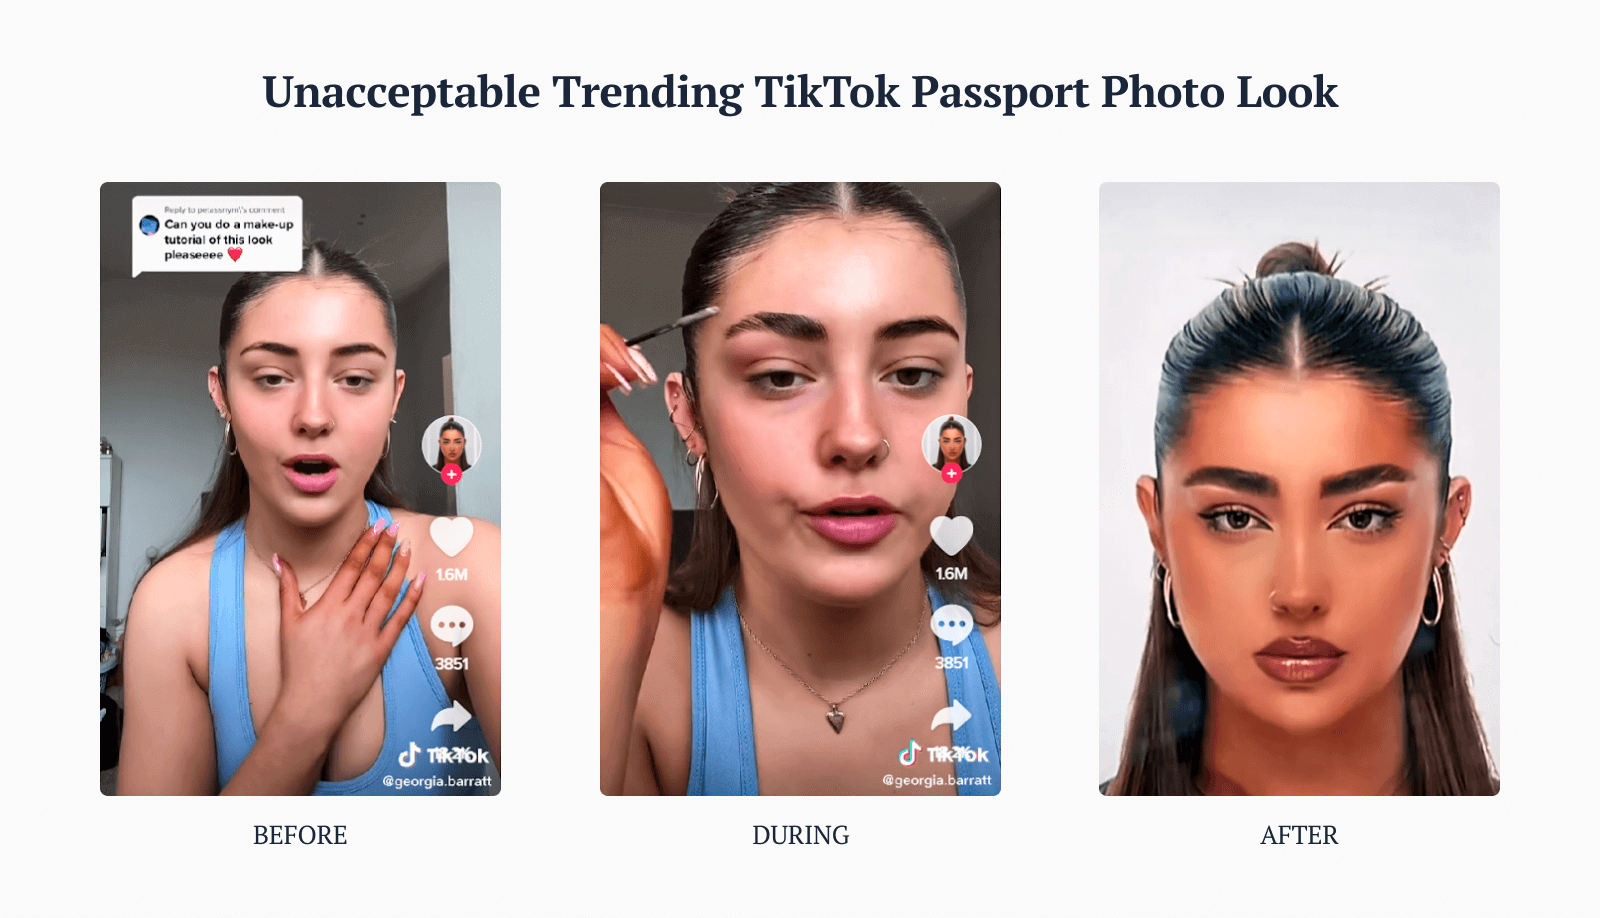 Screenshots of a TikTok video presenting an unacceptable makeup tutorial for passport photos.